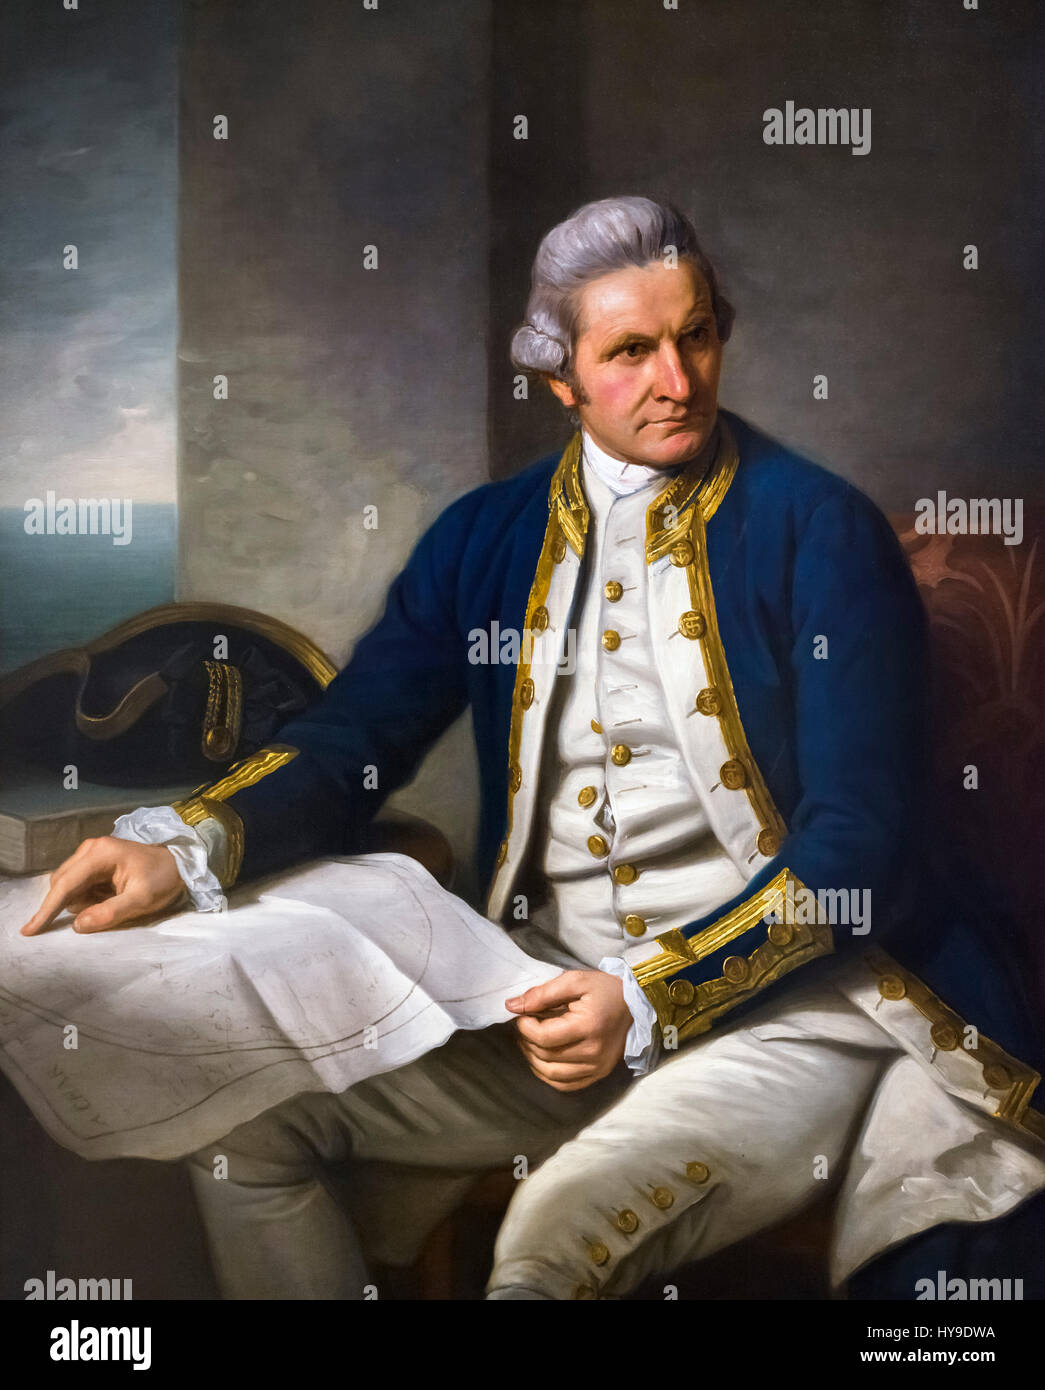 El capitán Cook. Retrato del Capitán James Cook (1728-1779) por Nathaniel Dance, óleo sobre lienzo, 1776. Foto de stock